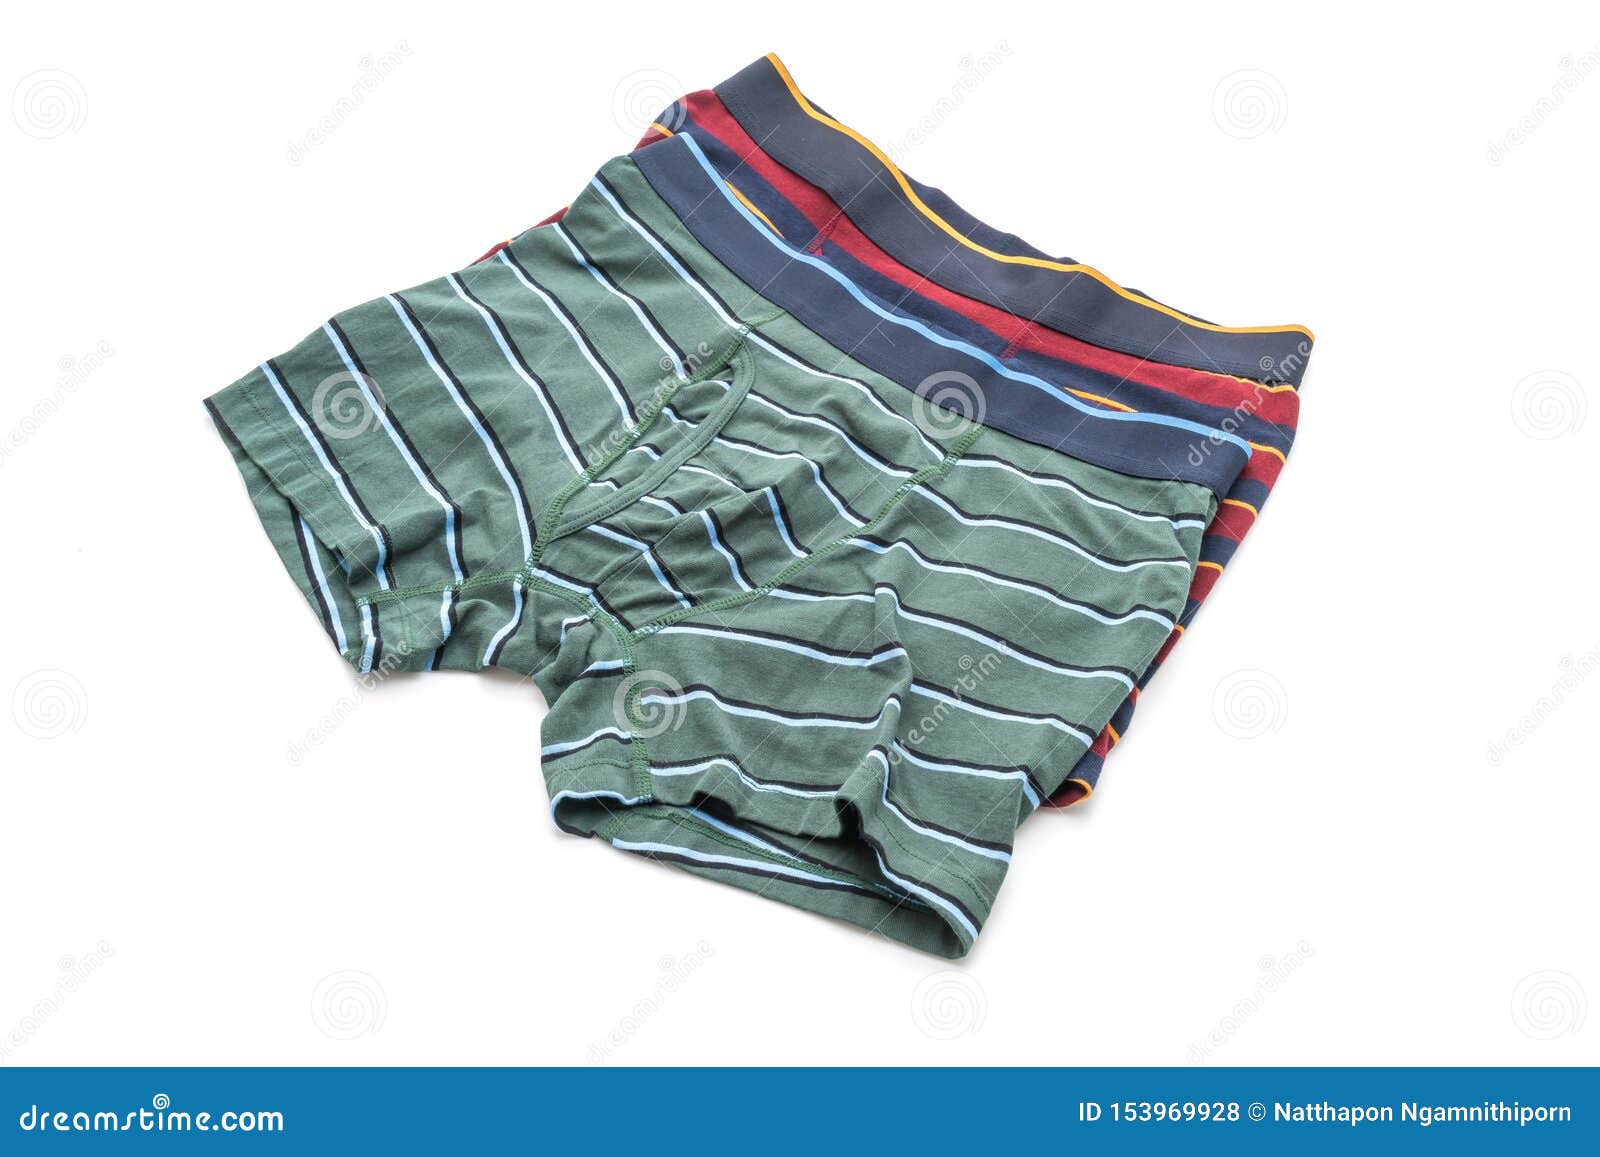 Striped men underwear stock photo. Image of pants, black - 153969928